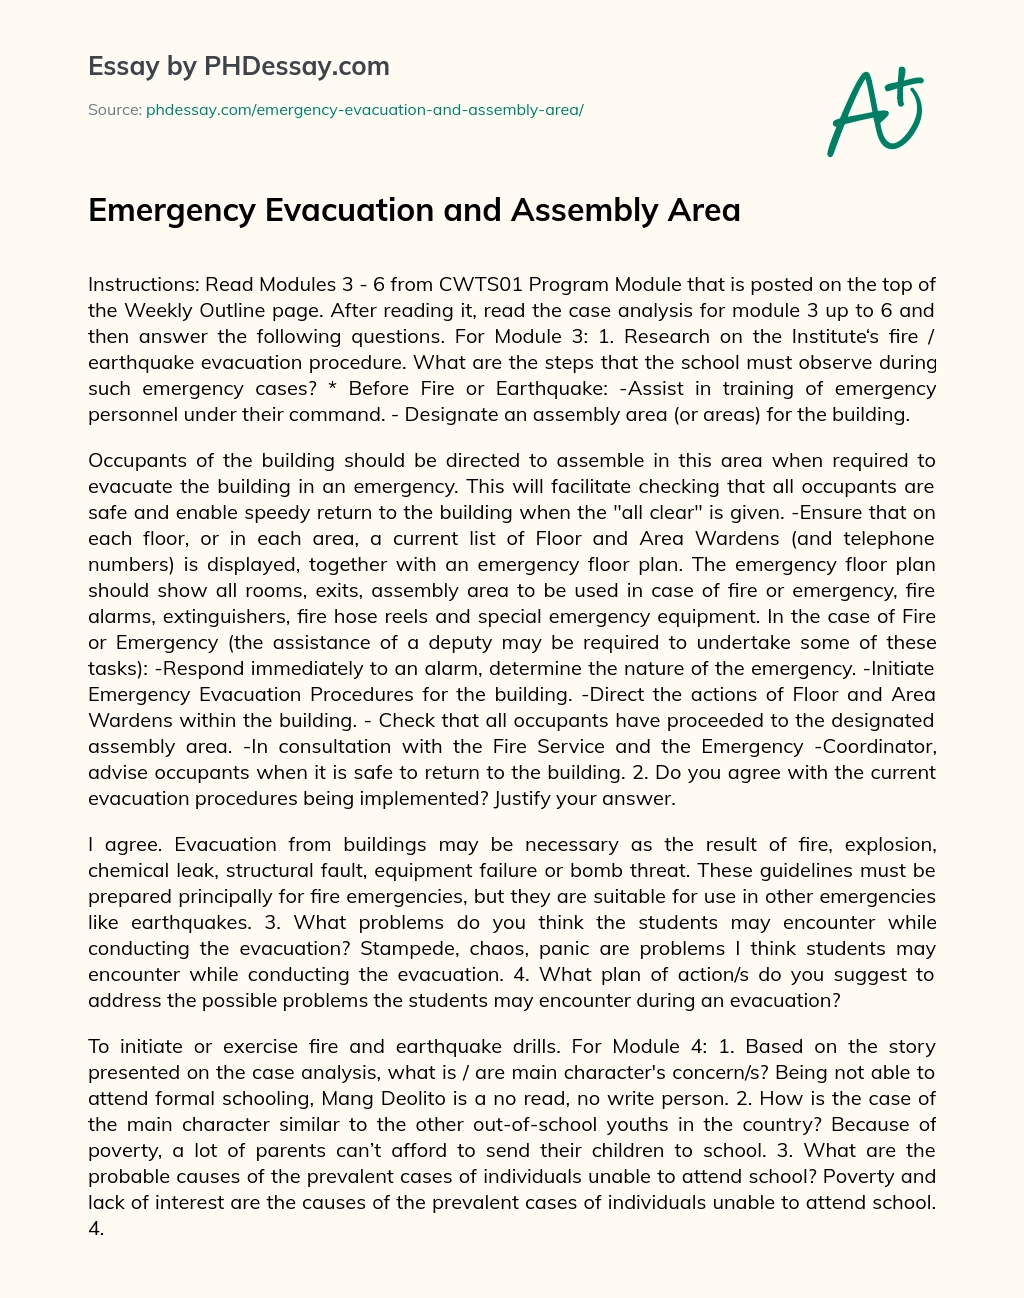 Emergency Evacuation and Assembly Area essay